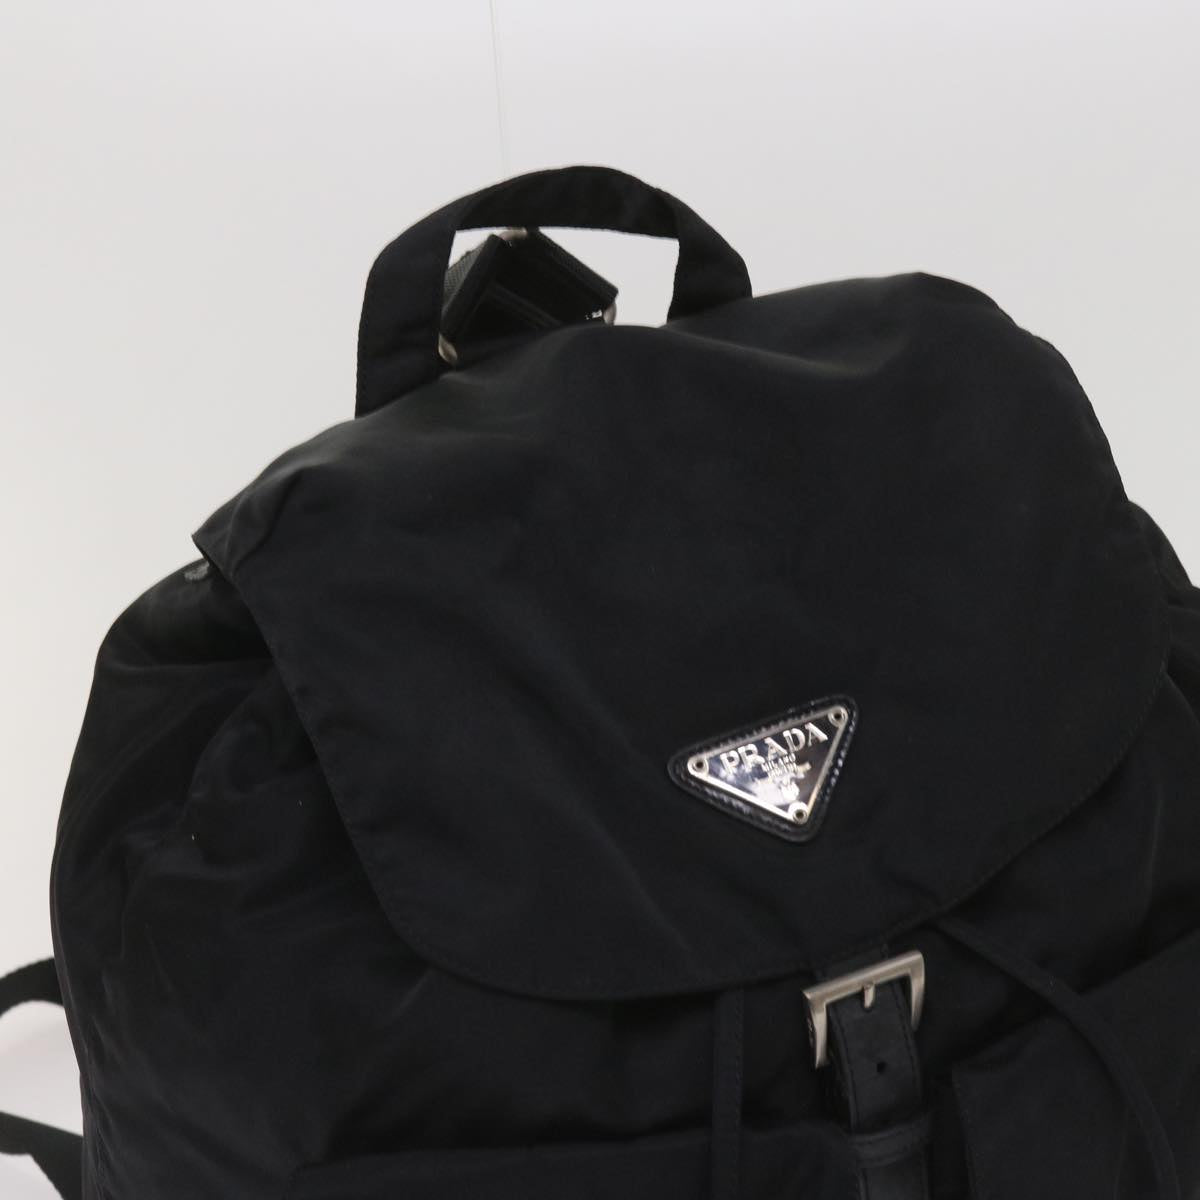 PRADA Backpack Nylon Black Auth bs11701